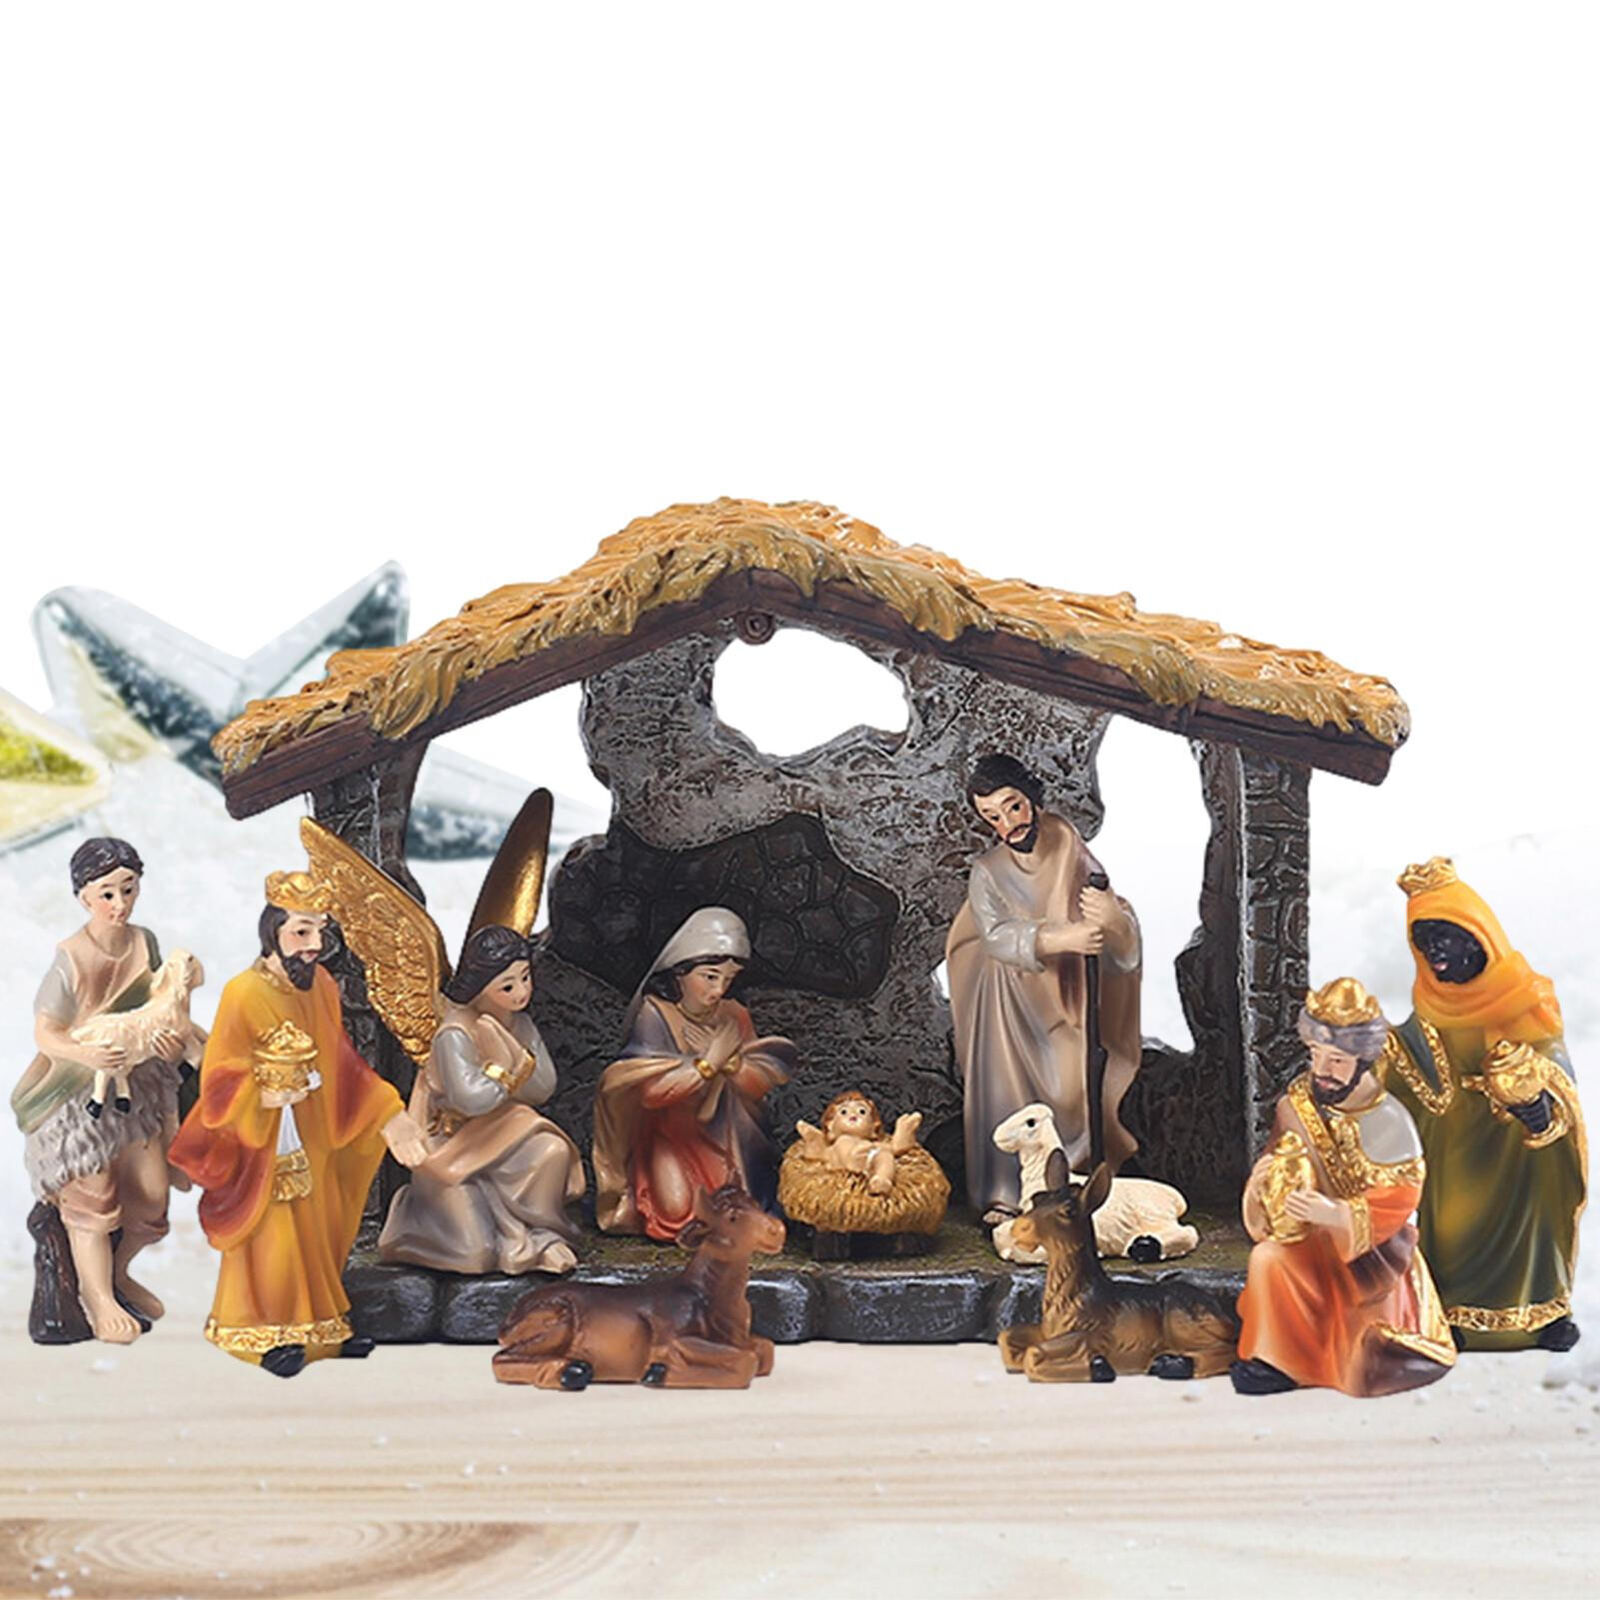 vintage nativity set with 12 figures ceramic CRECHE manger Christmas home deco